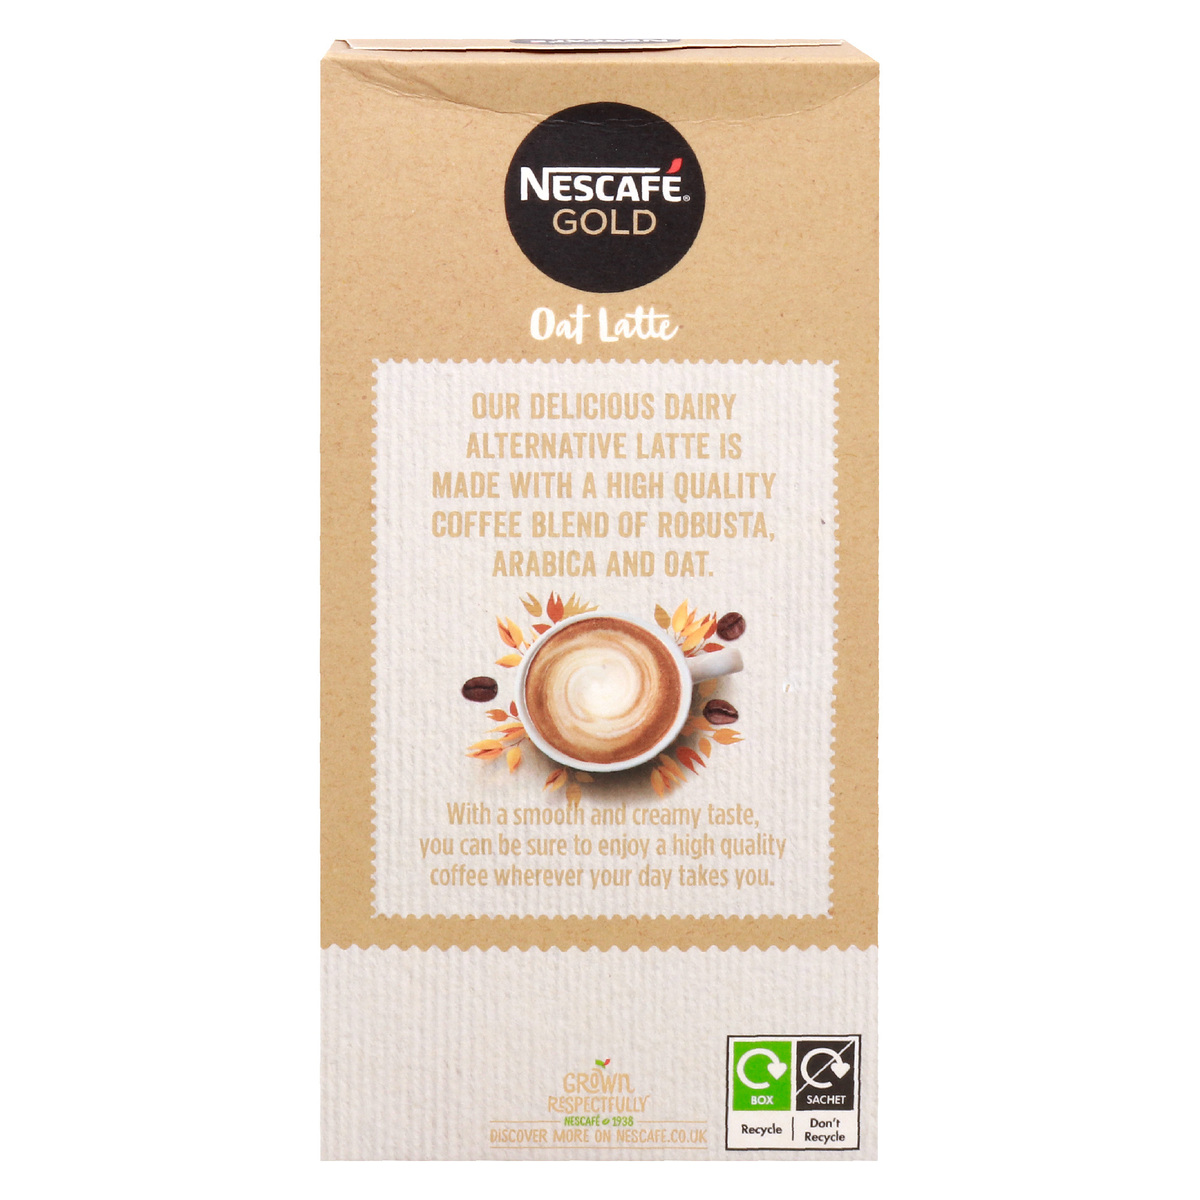 Nescafe Gold Oat Latte 6 pcs 96 g